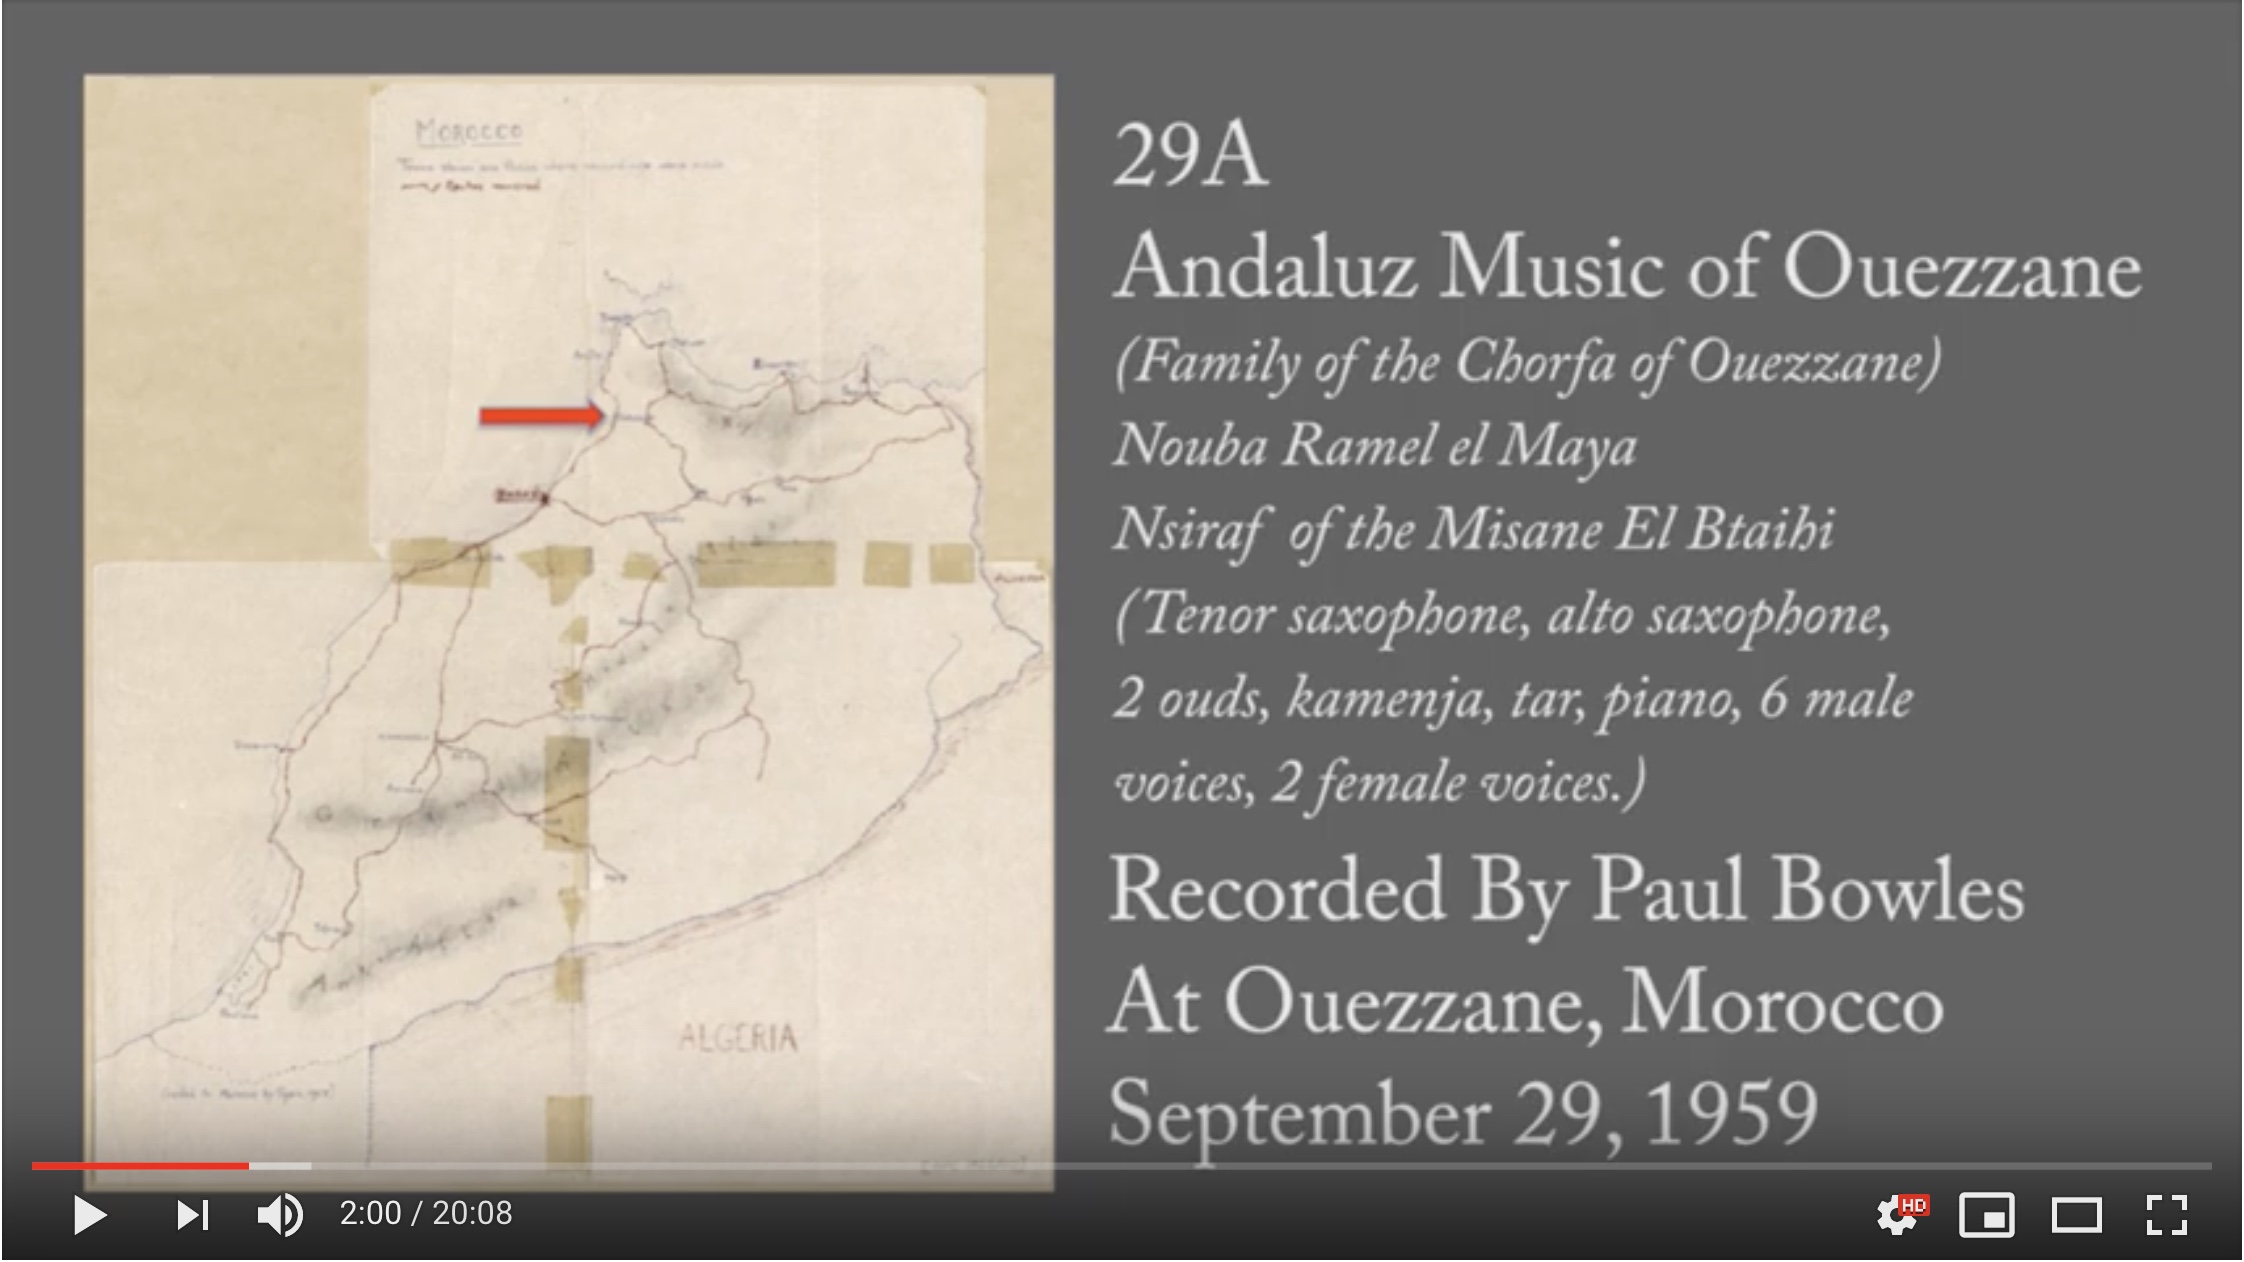  Ouezzane - 29A. Nsiraf of misane El Btaihi of the nouba Ramel el Maya, Andaluz Music of Ouezzane.